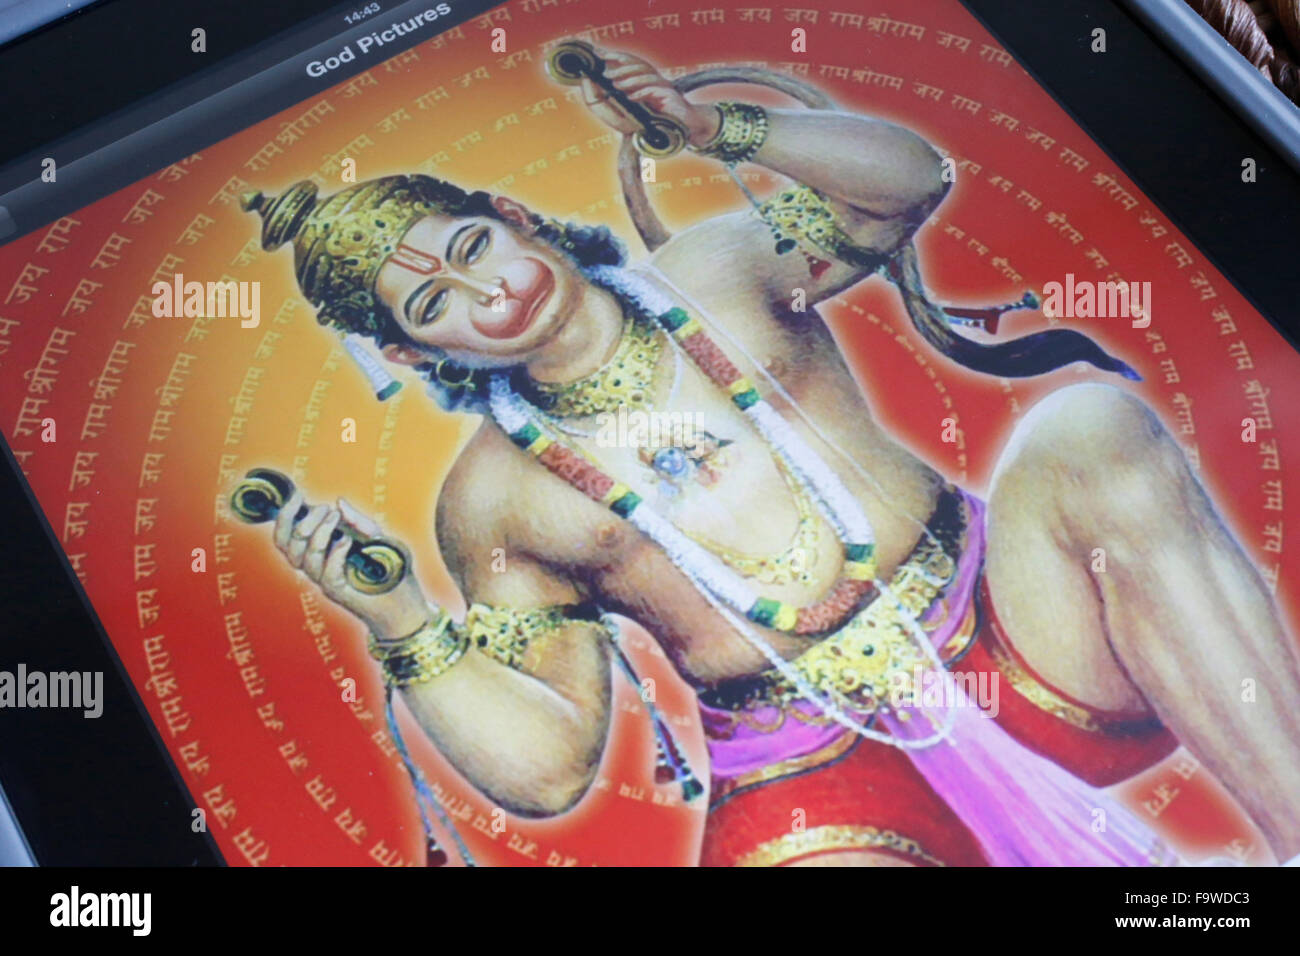 Hindu deity on an Ipad. Hanuman. Stock Photo